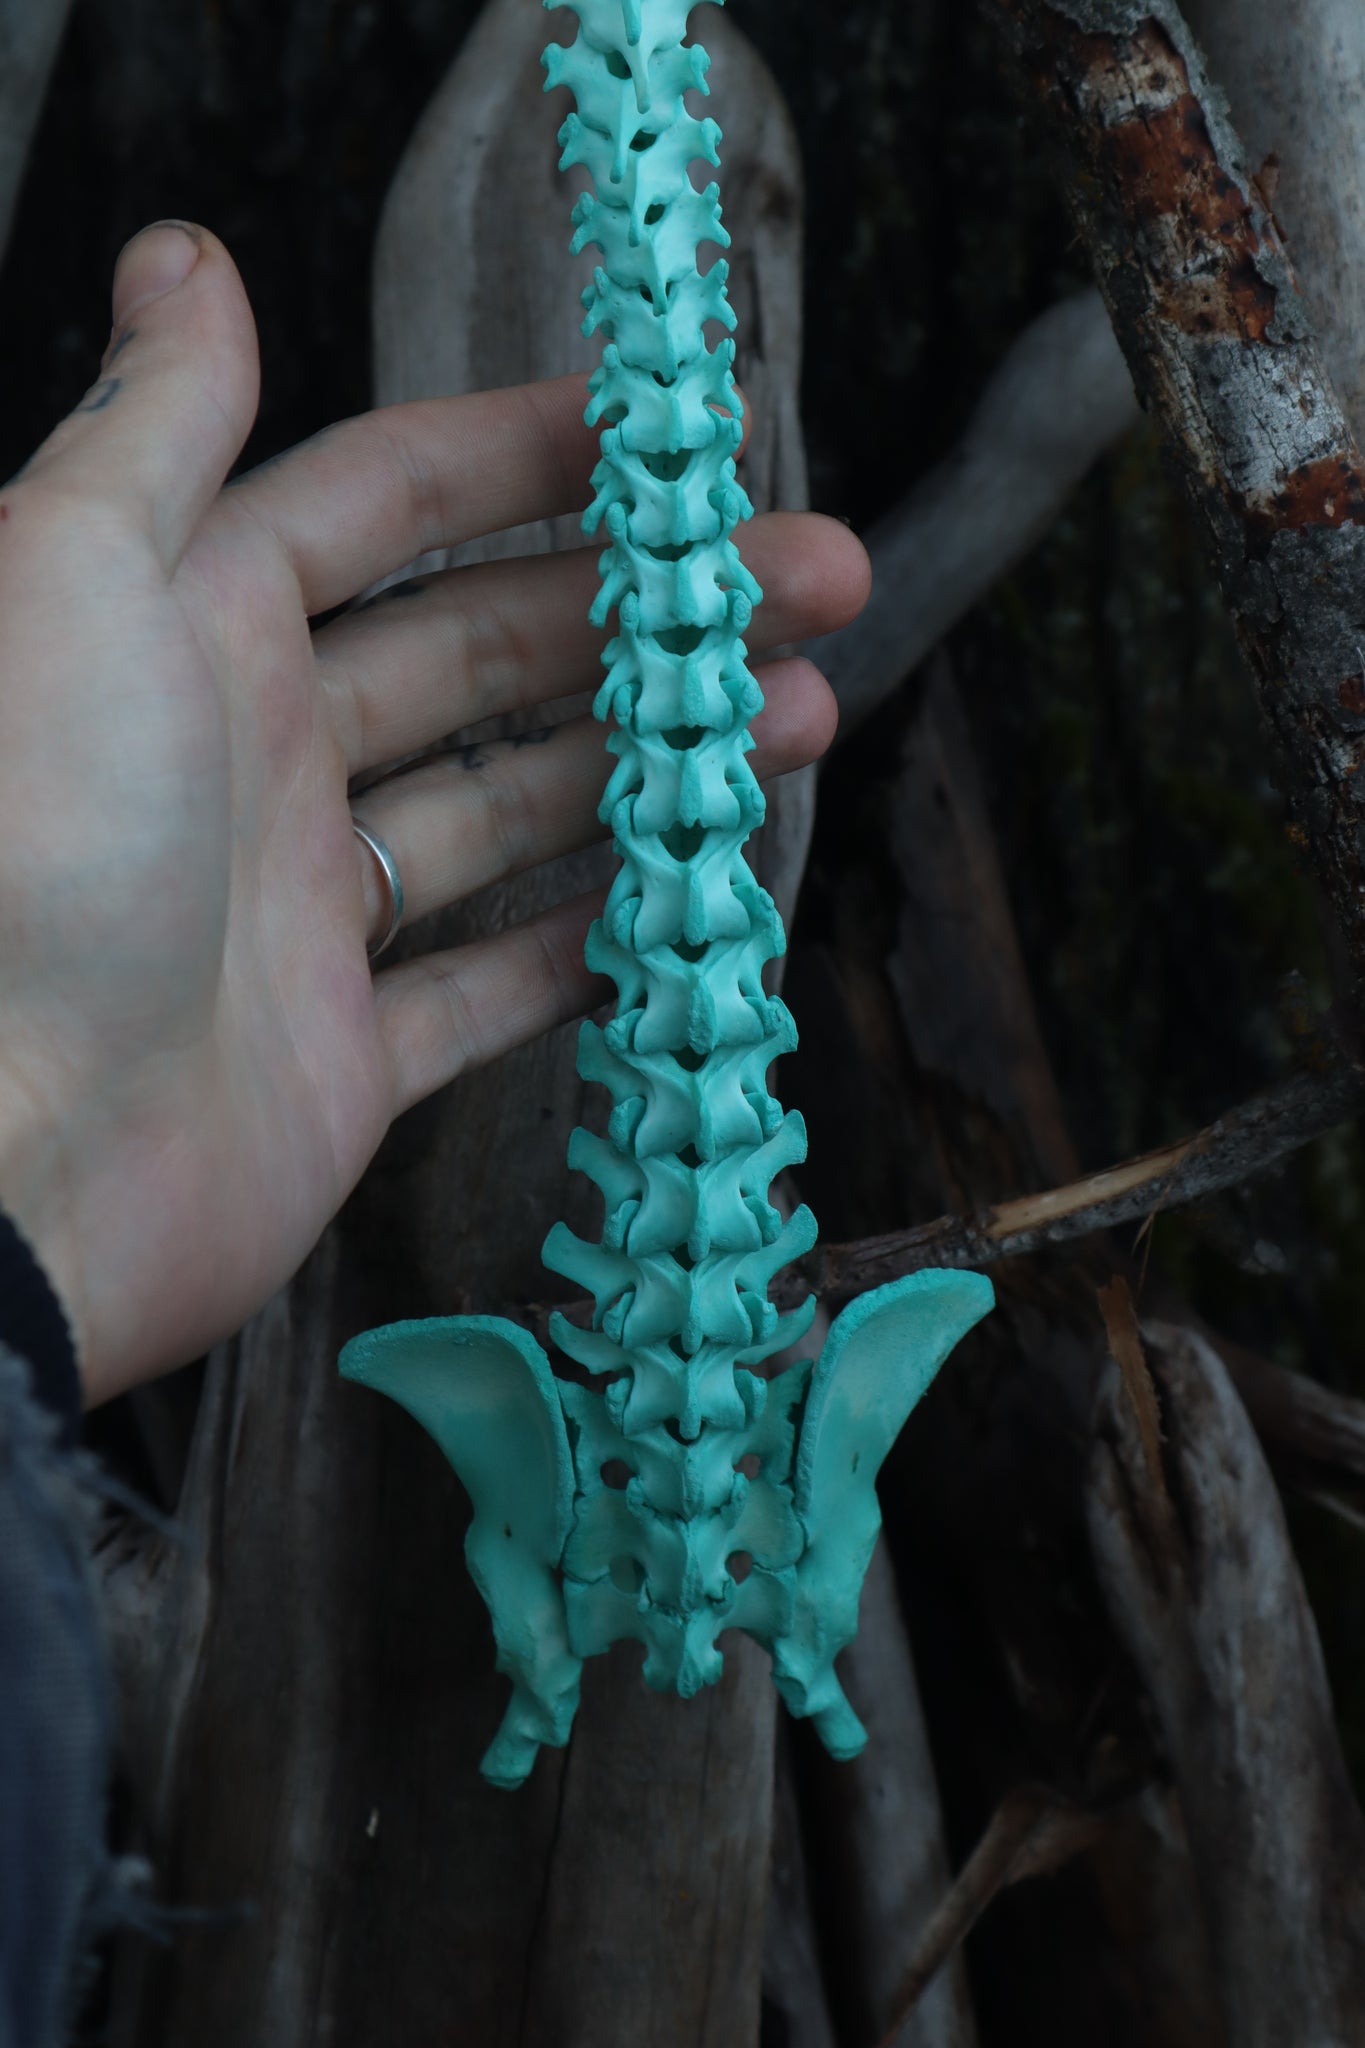 Copper Porcupine Spinal Column Articulation